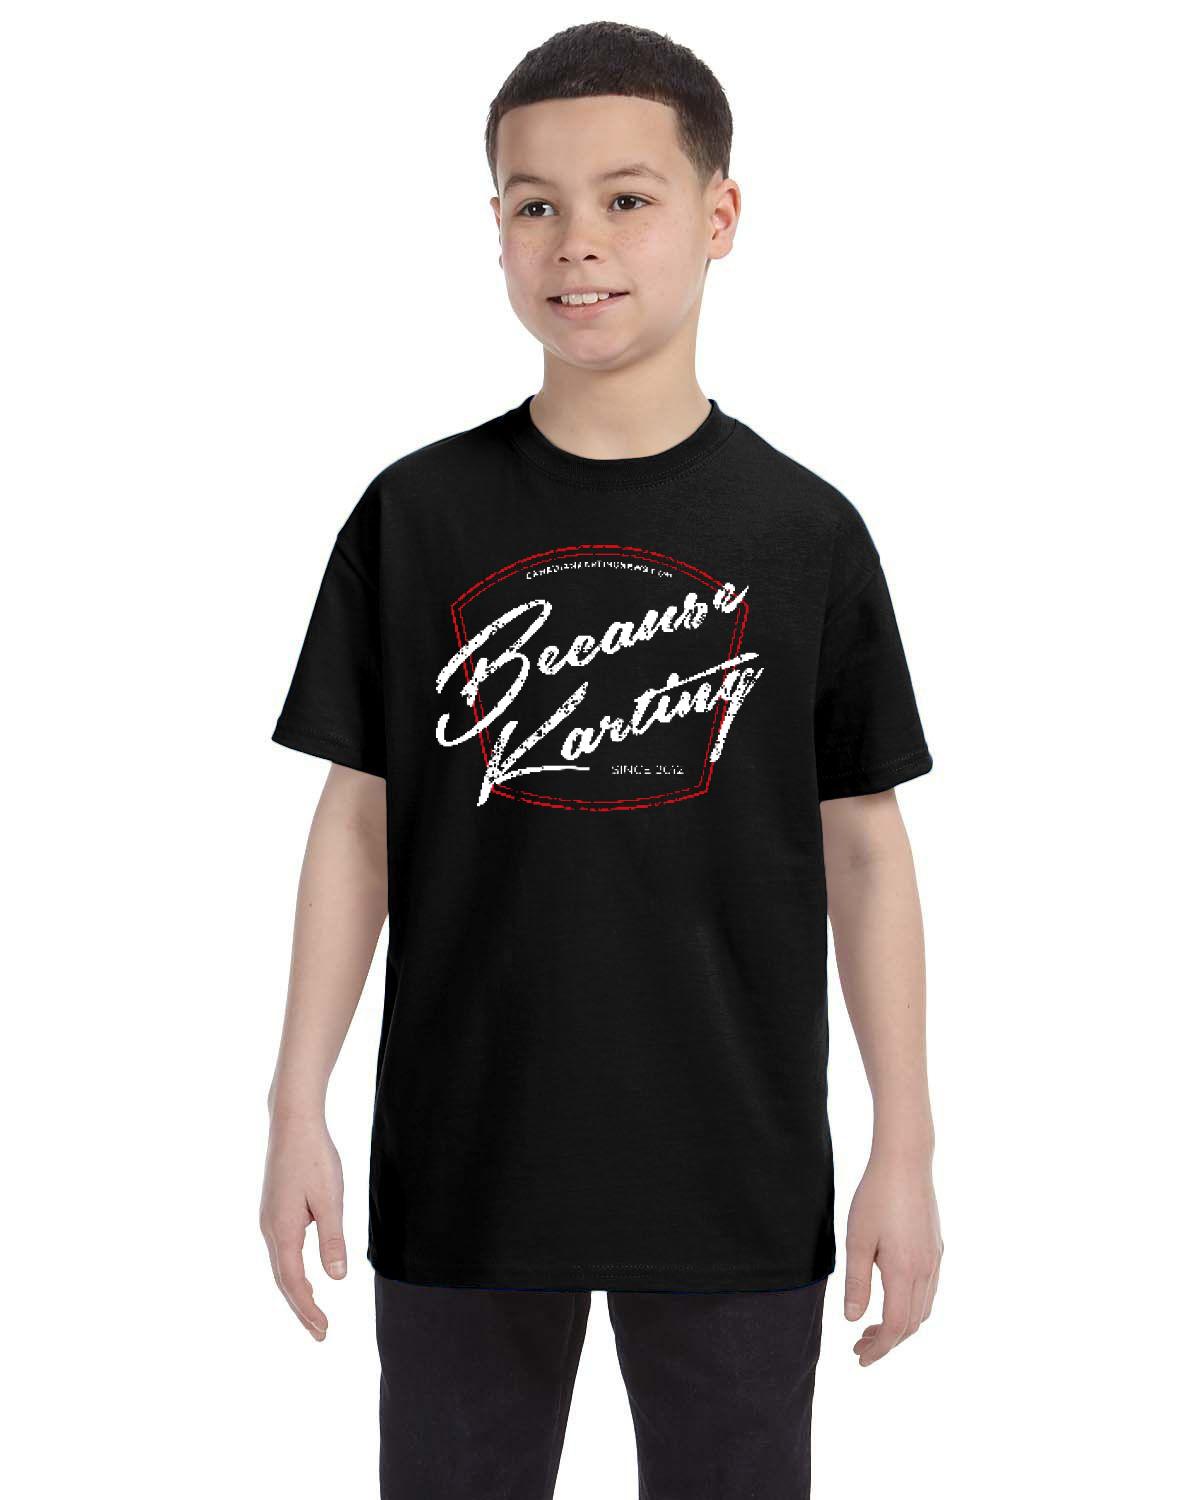 Canadian Karting News Kid's T-Shirt